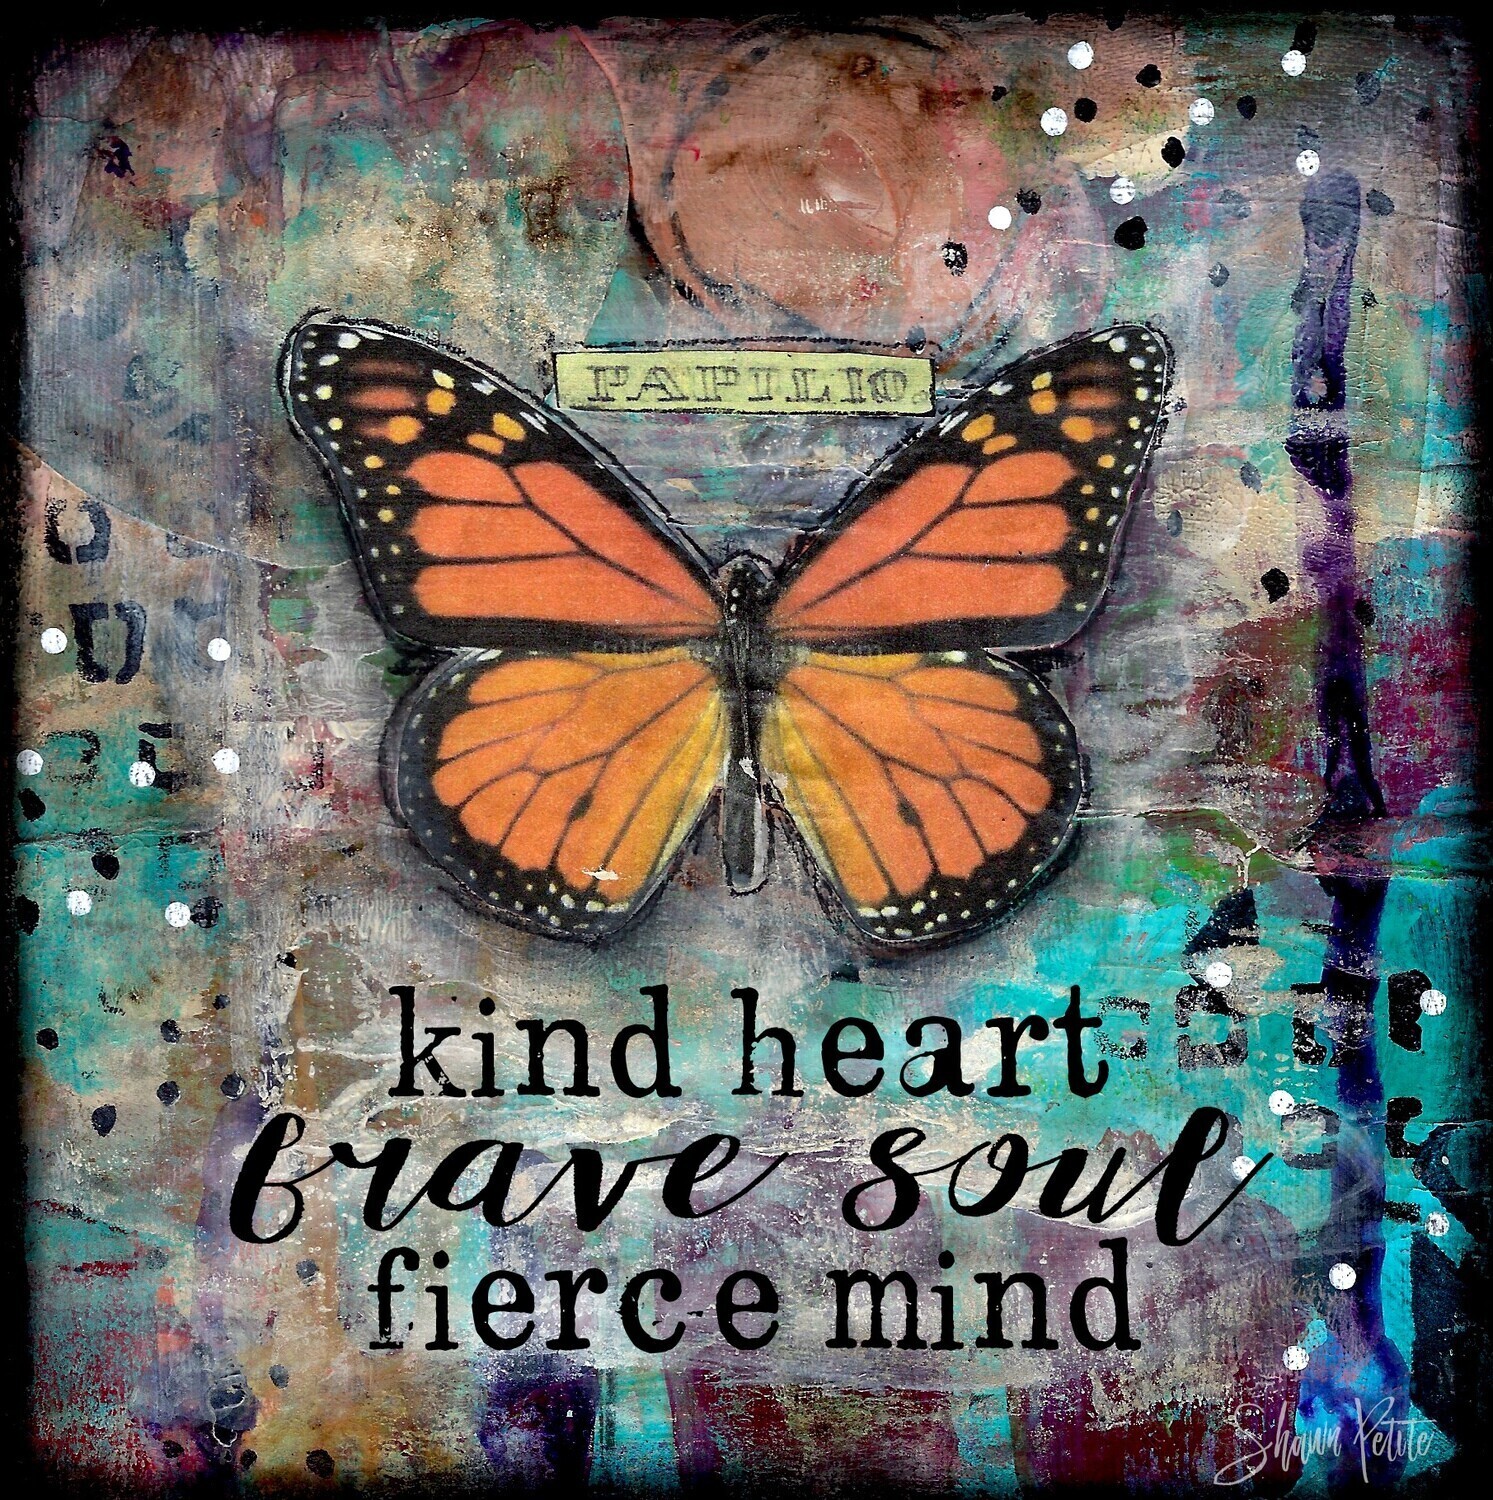 "Kind heart brave soul" Print on Wood 4x4 Clearance